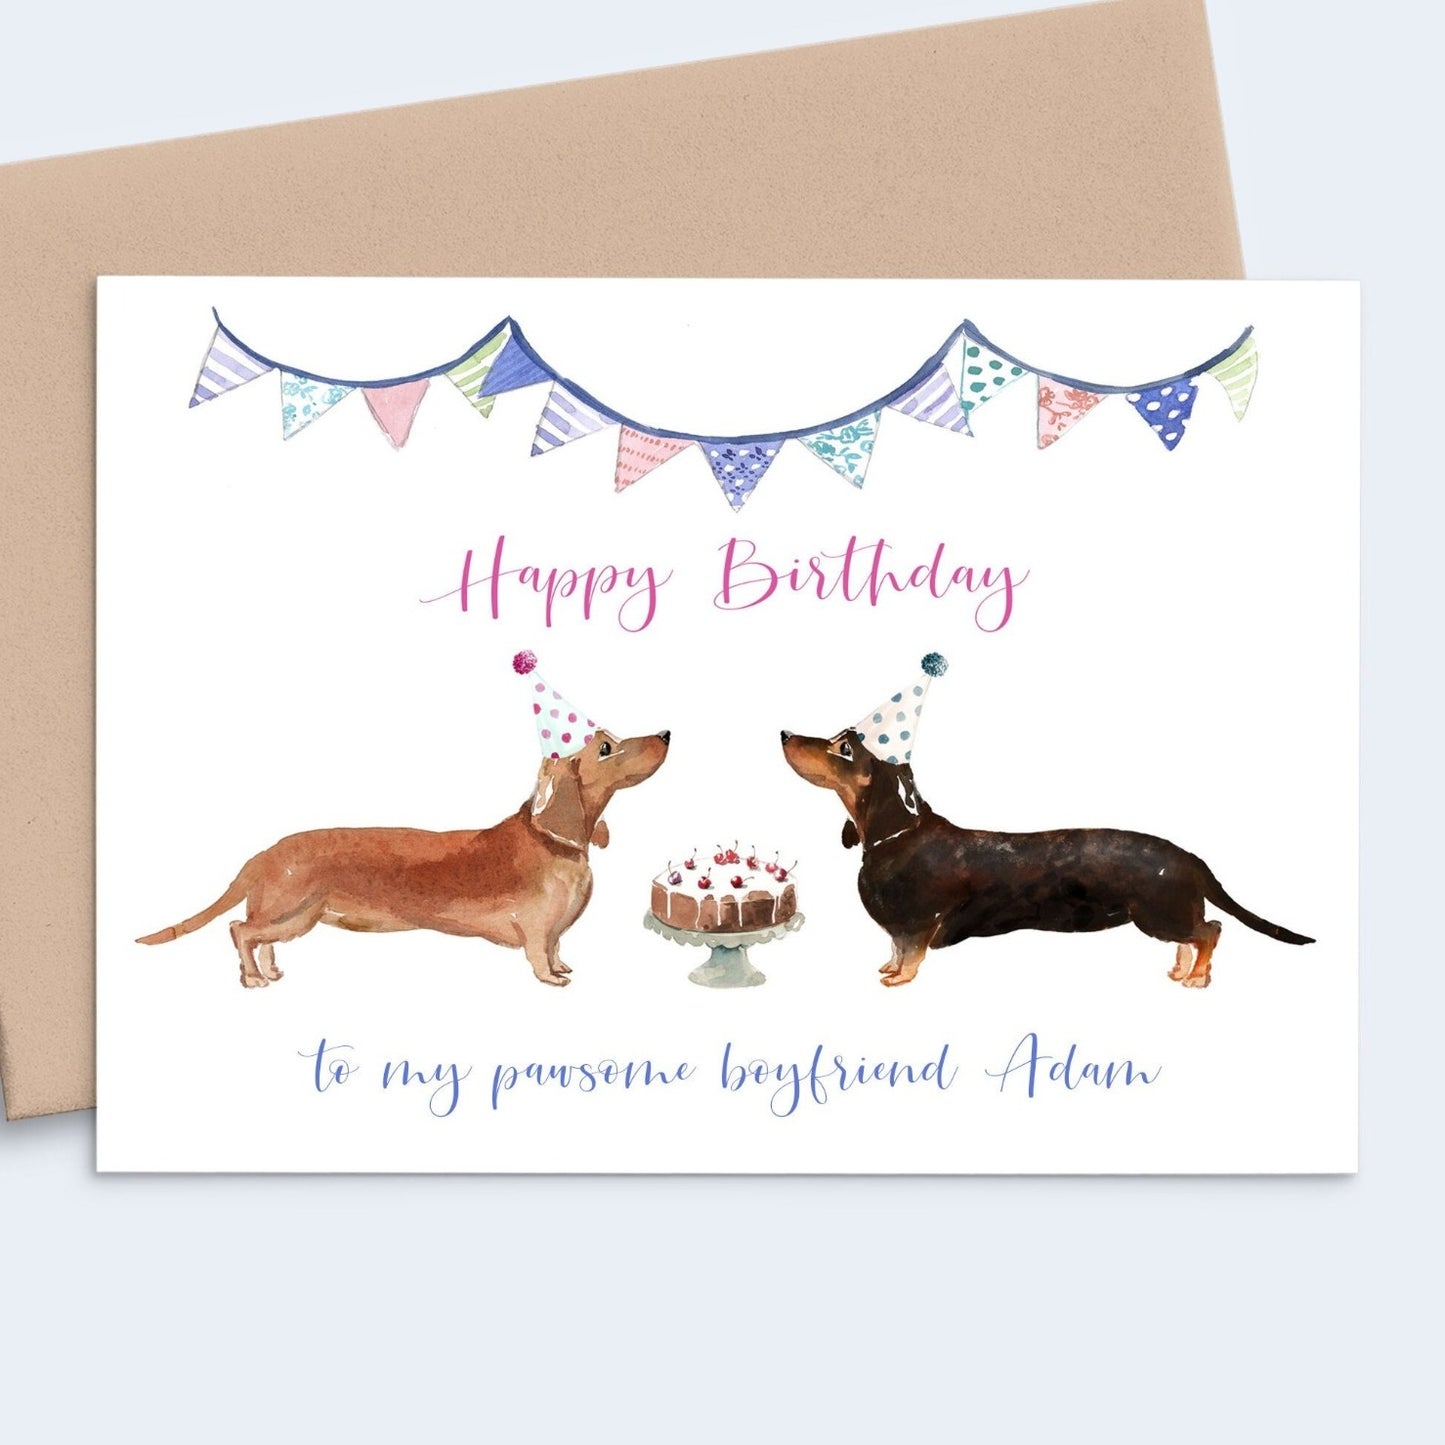 watercolour dachshund birthday card boyfriend husband fiance personalised matte white cardstock kraft brown envelope